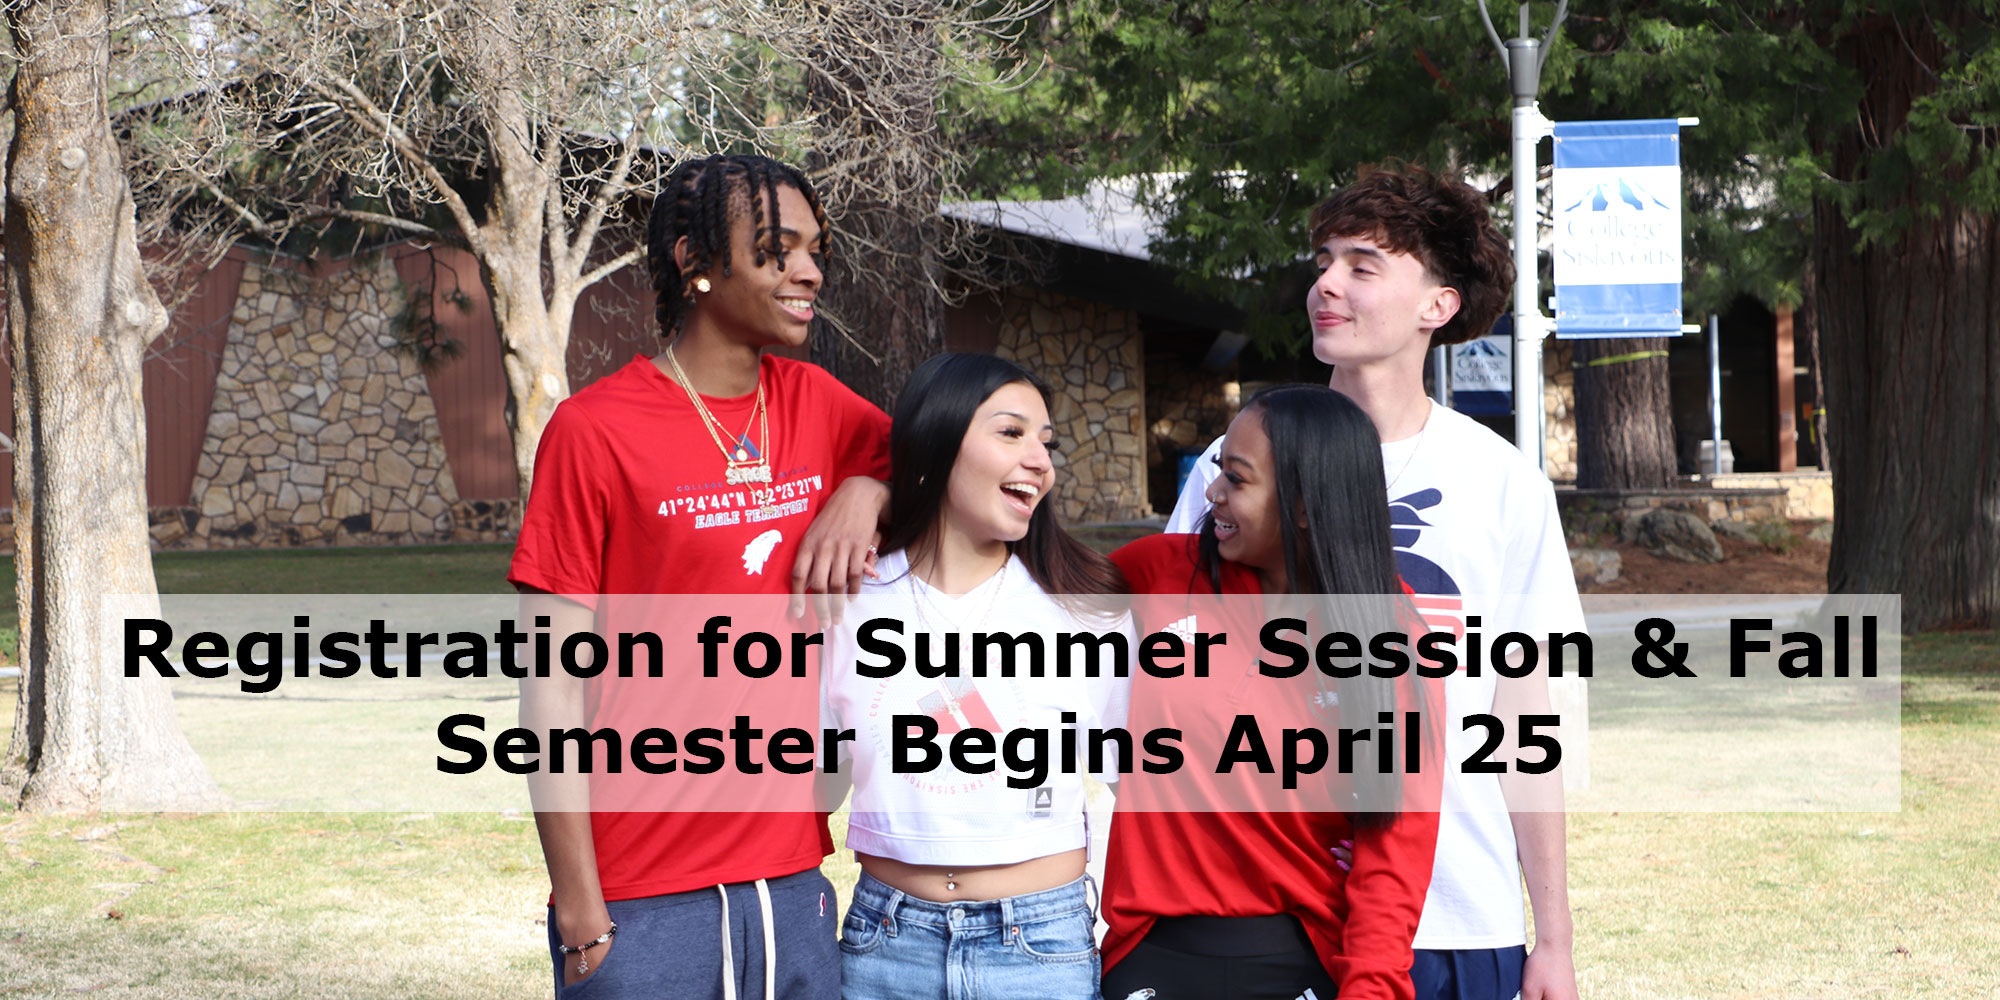 Registration for Summer Session & Fall Semester Begins April 25